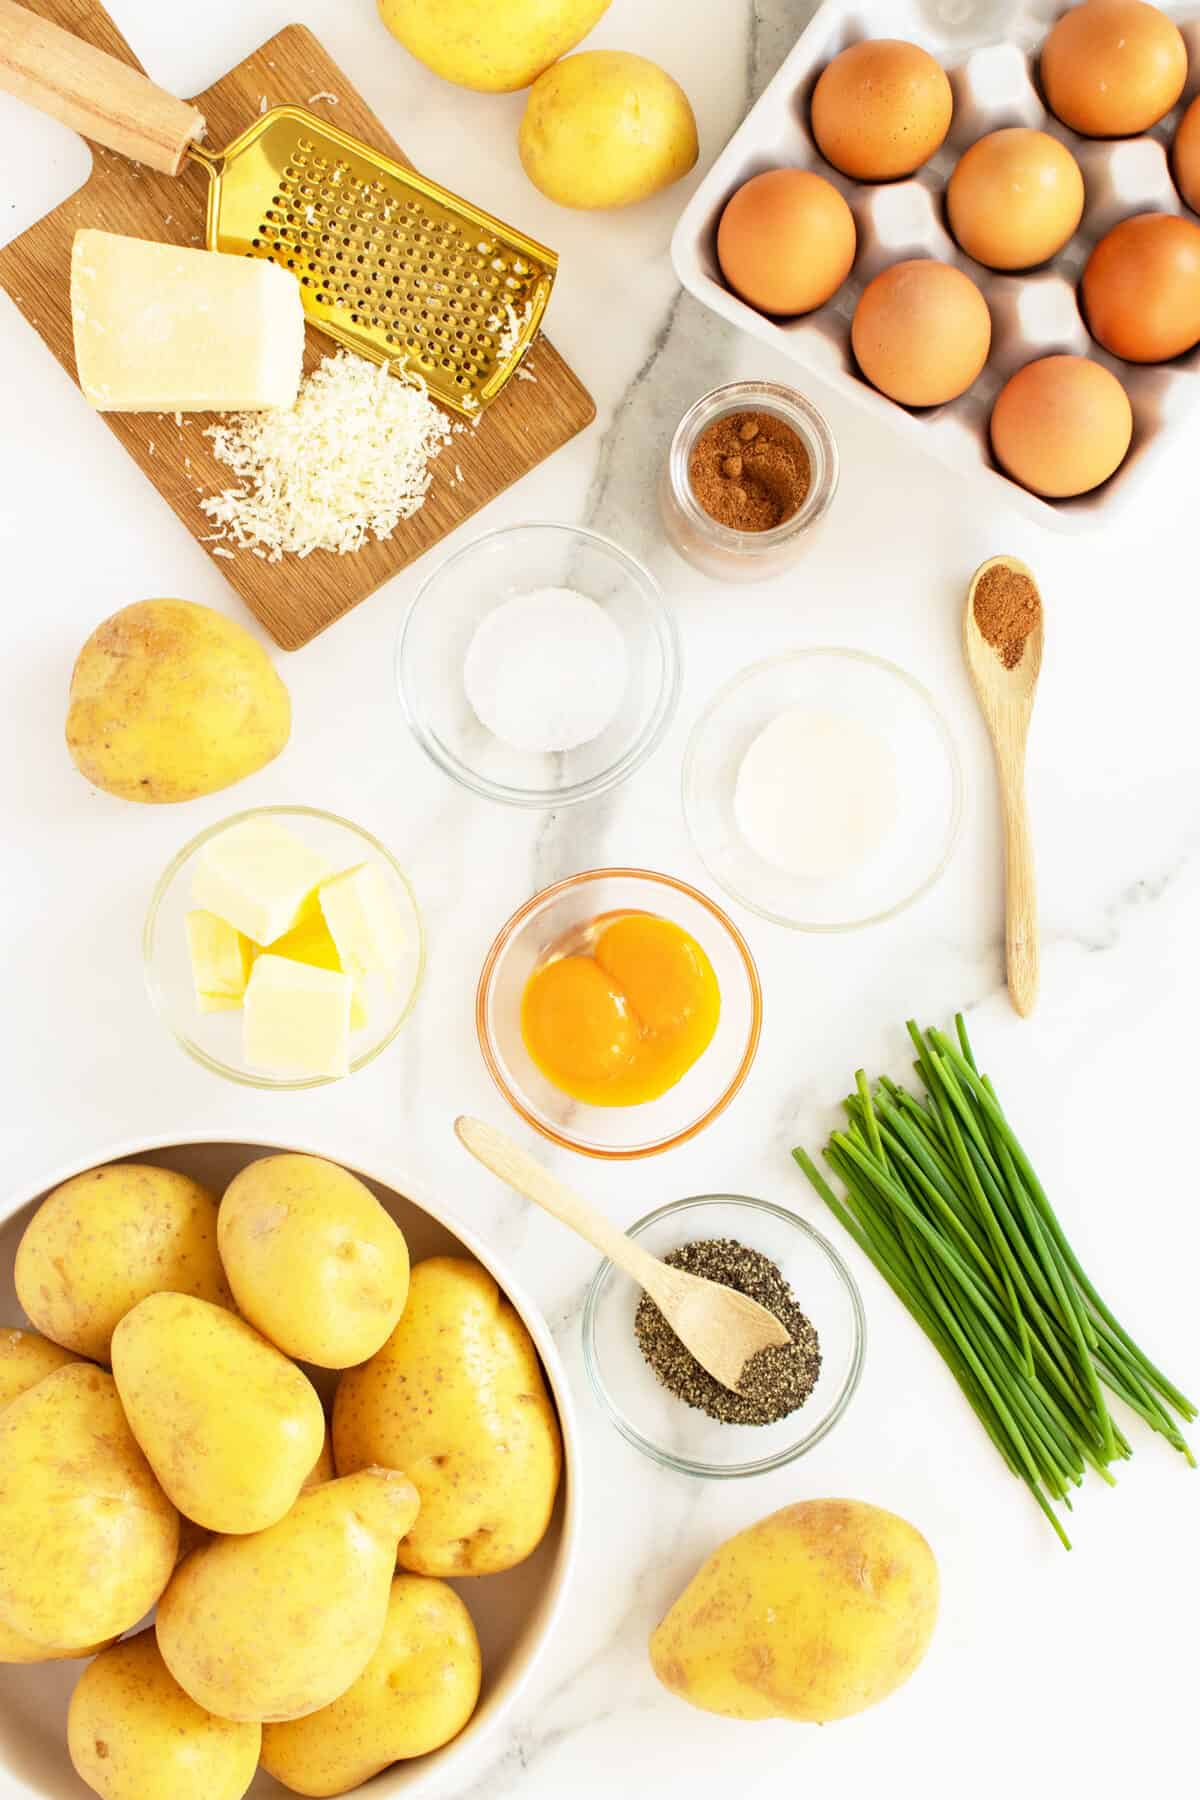 duchess potatoes ingredients